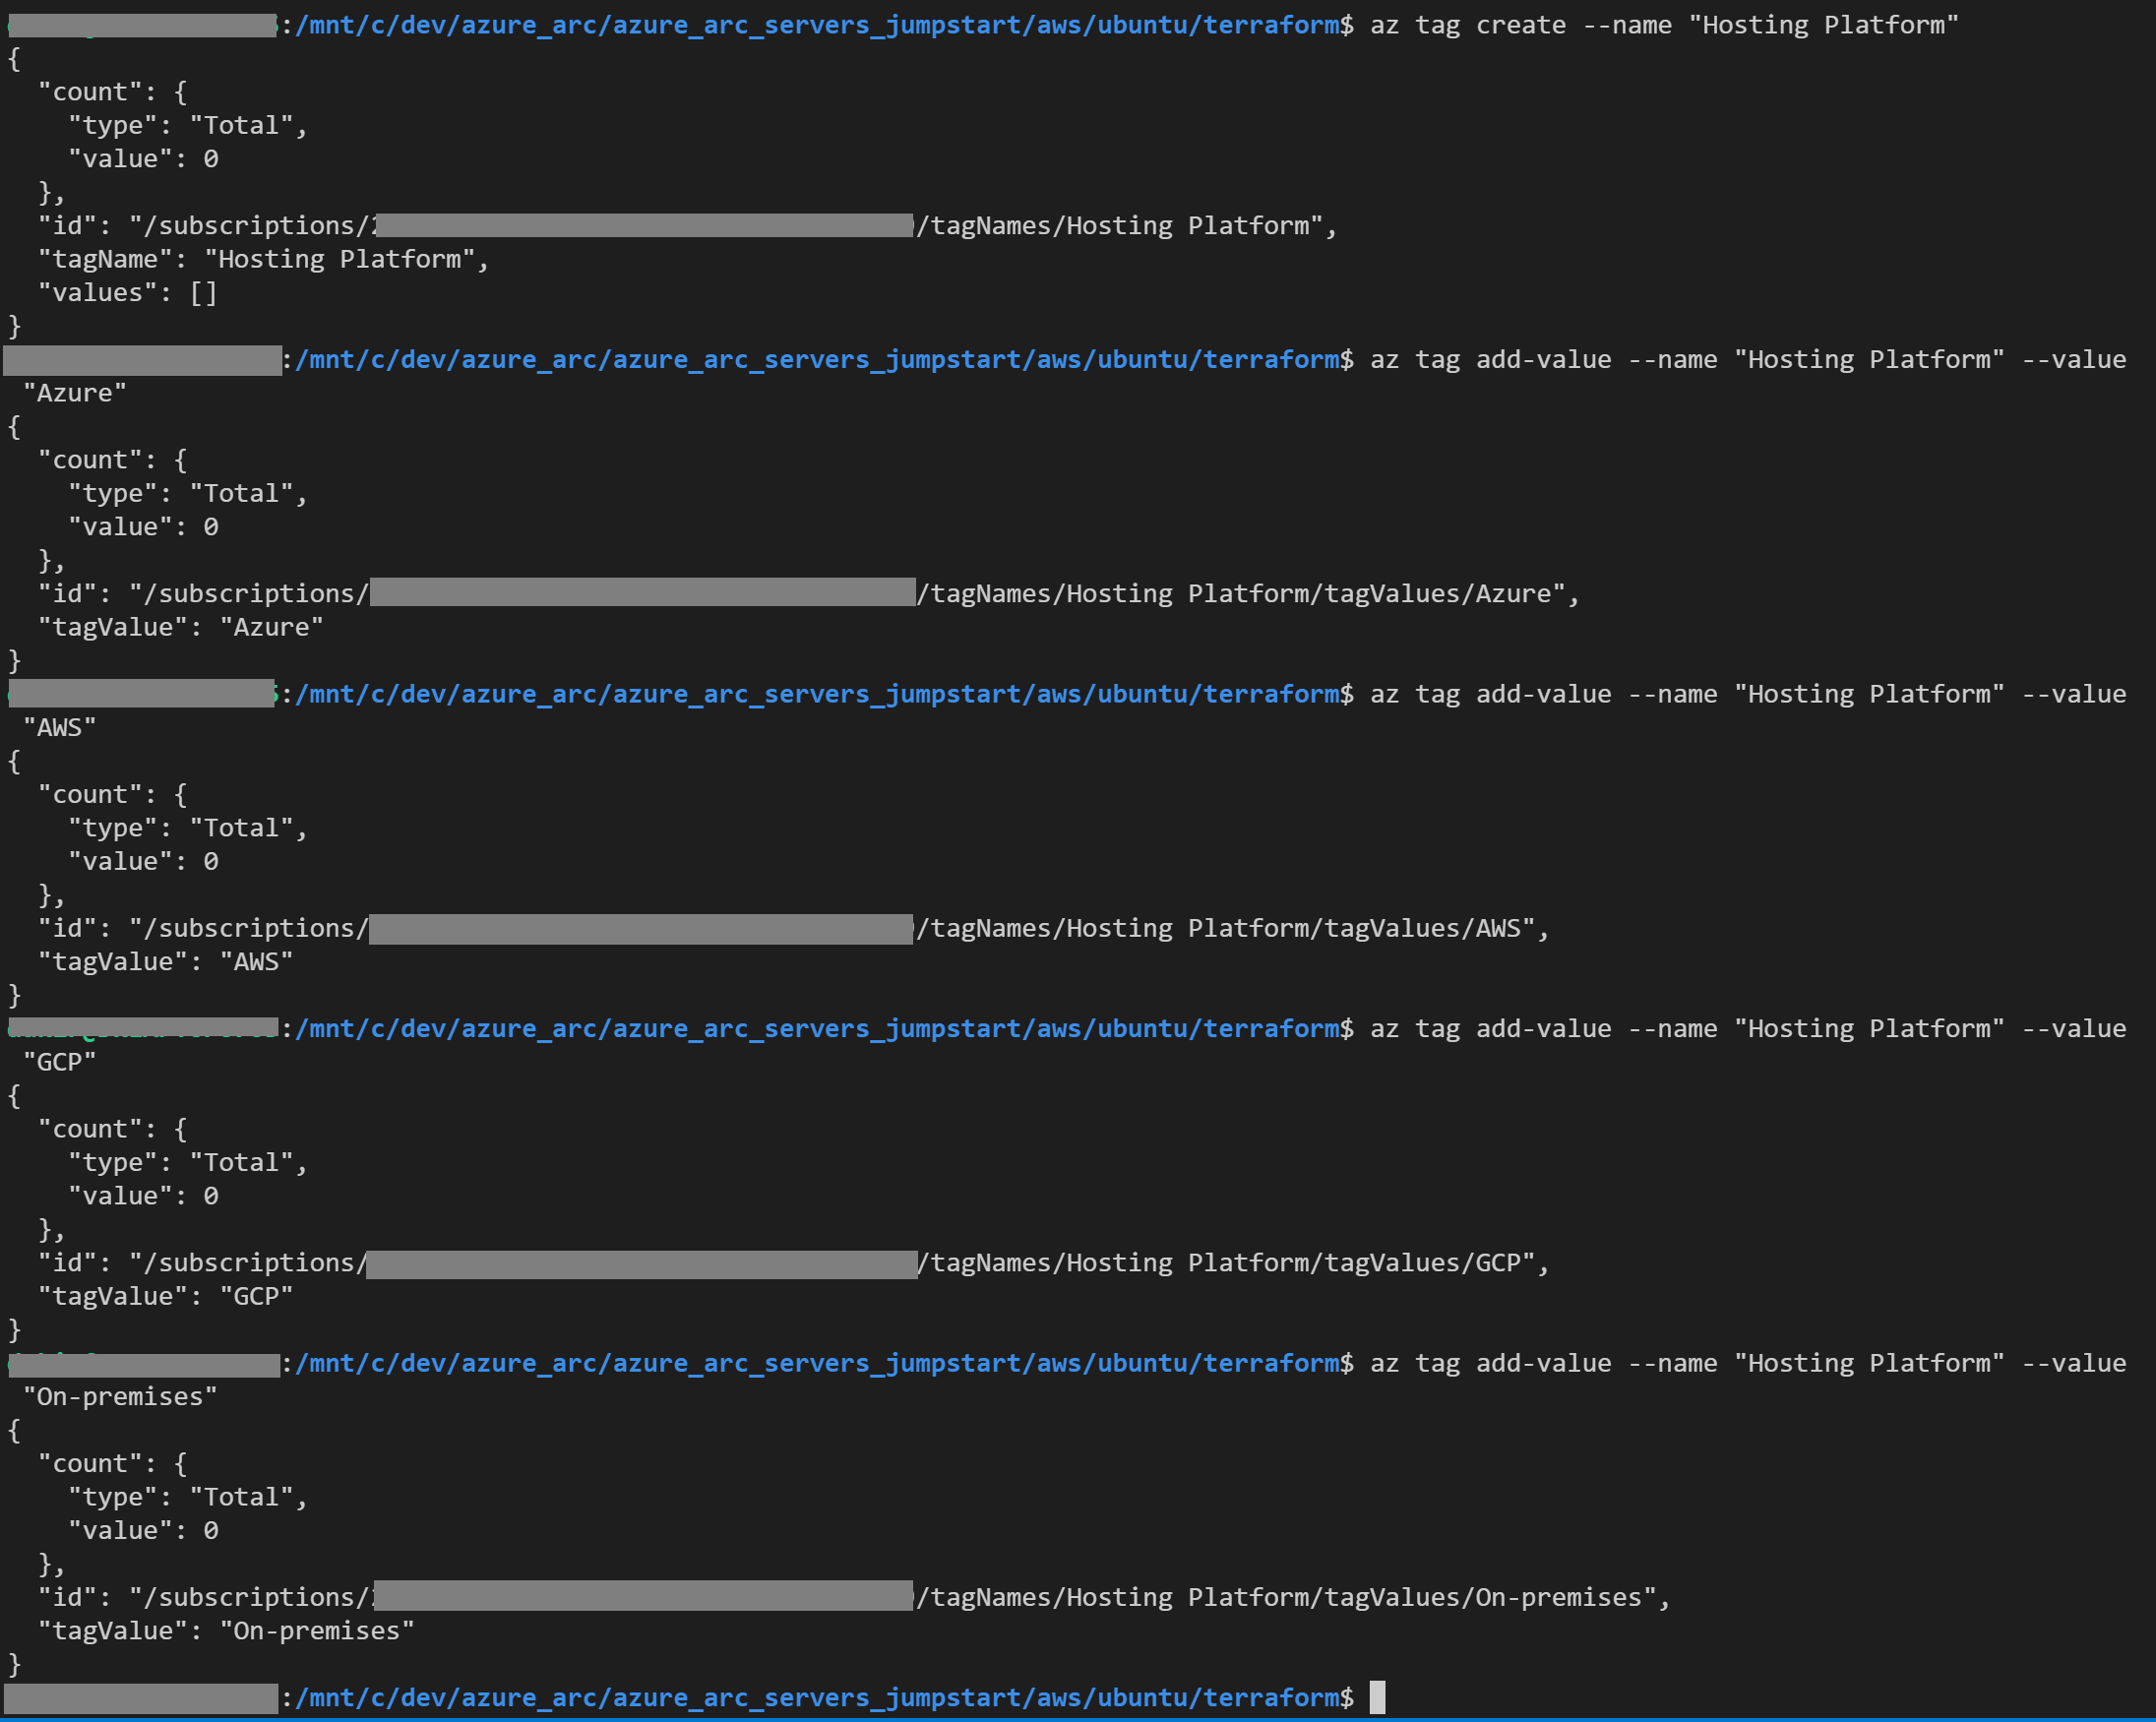 A screenshot of an output of the az tag create command.